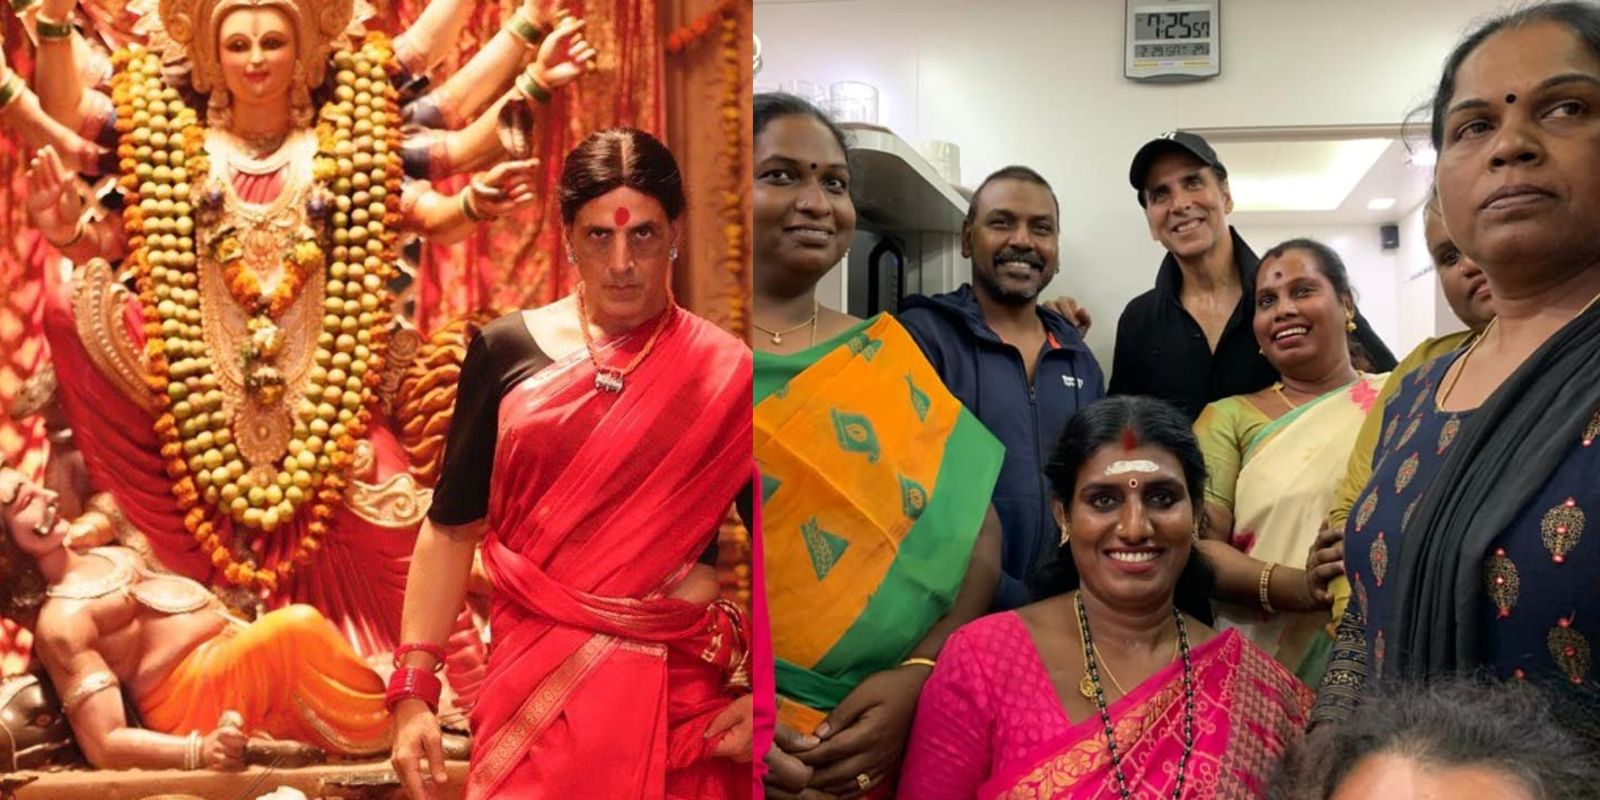 Laxmmi Bomb Actor Akshay Kumar Donates 1.5 Crores For The First Transgender Building In Chennai